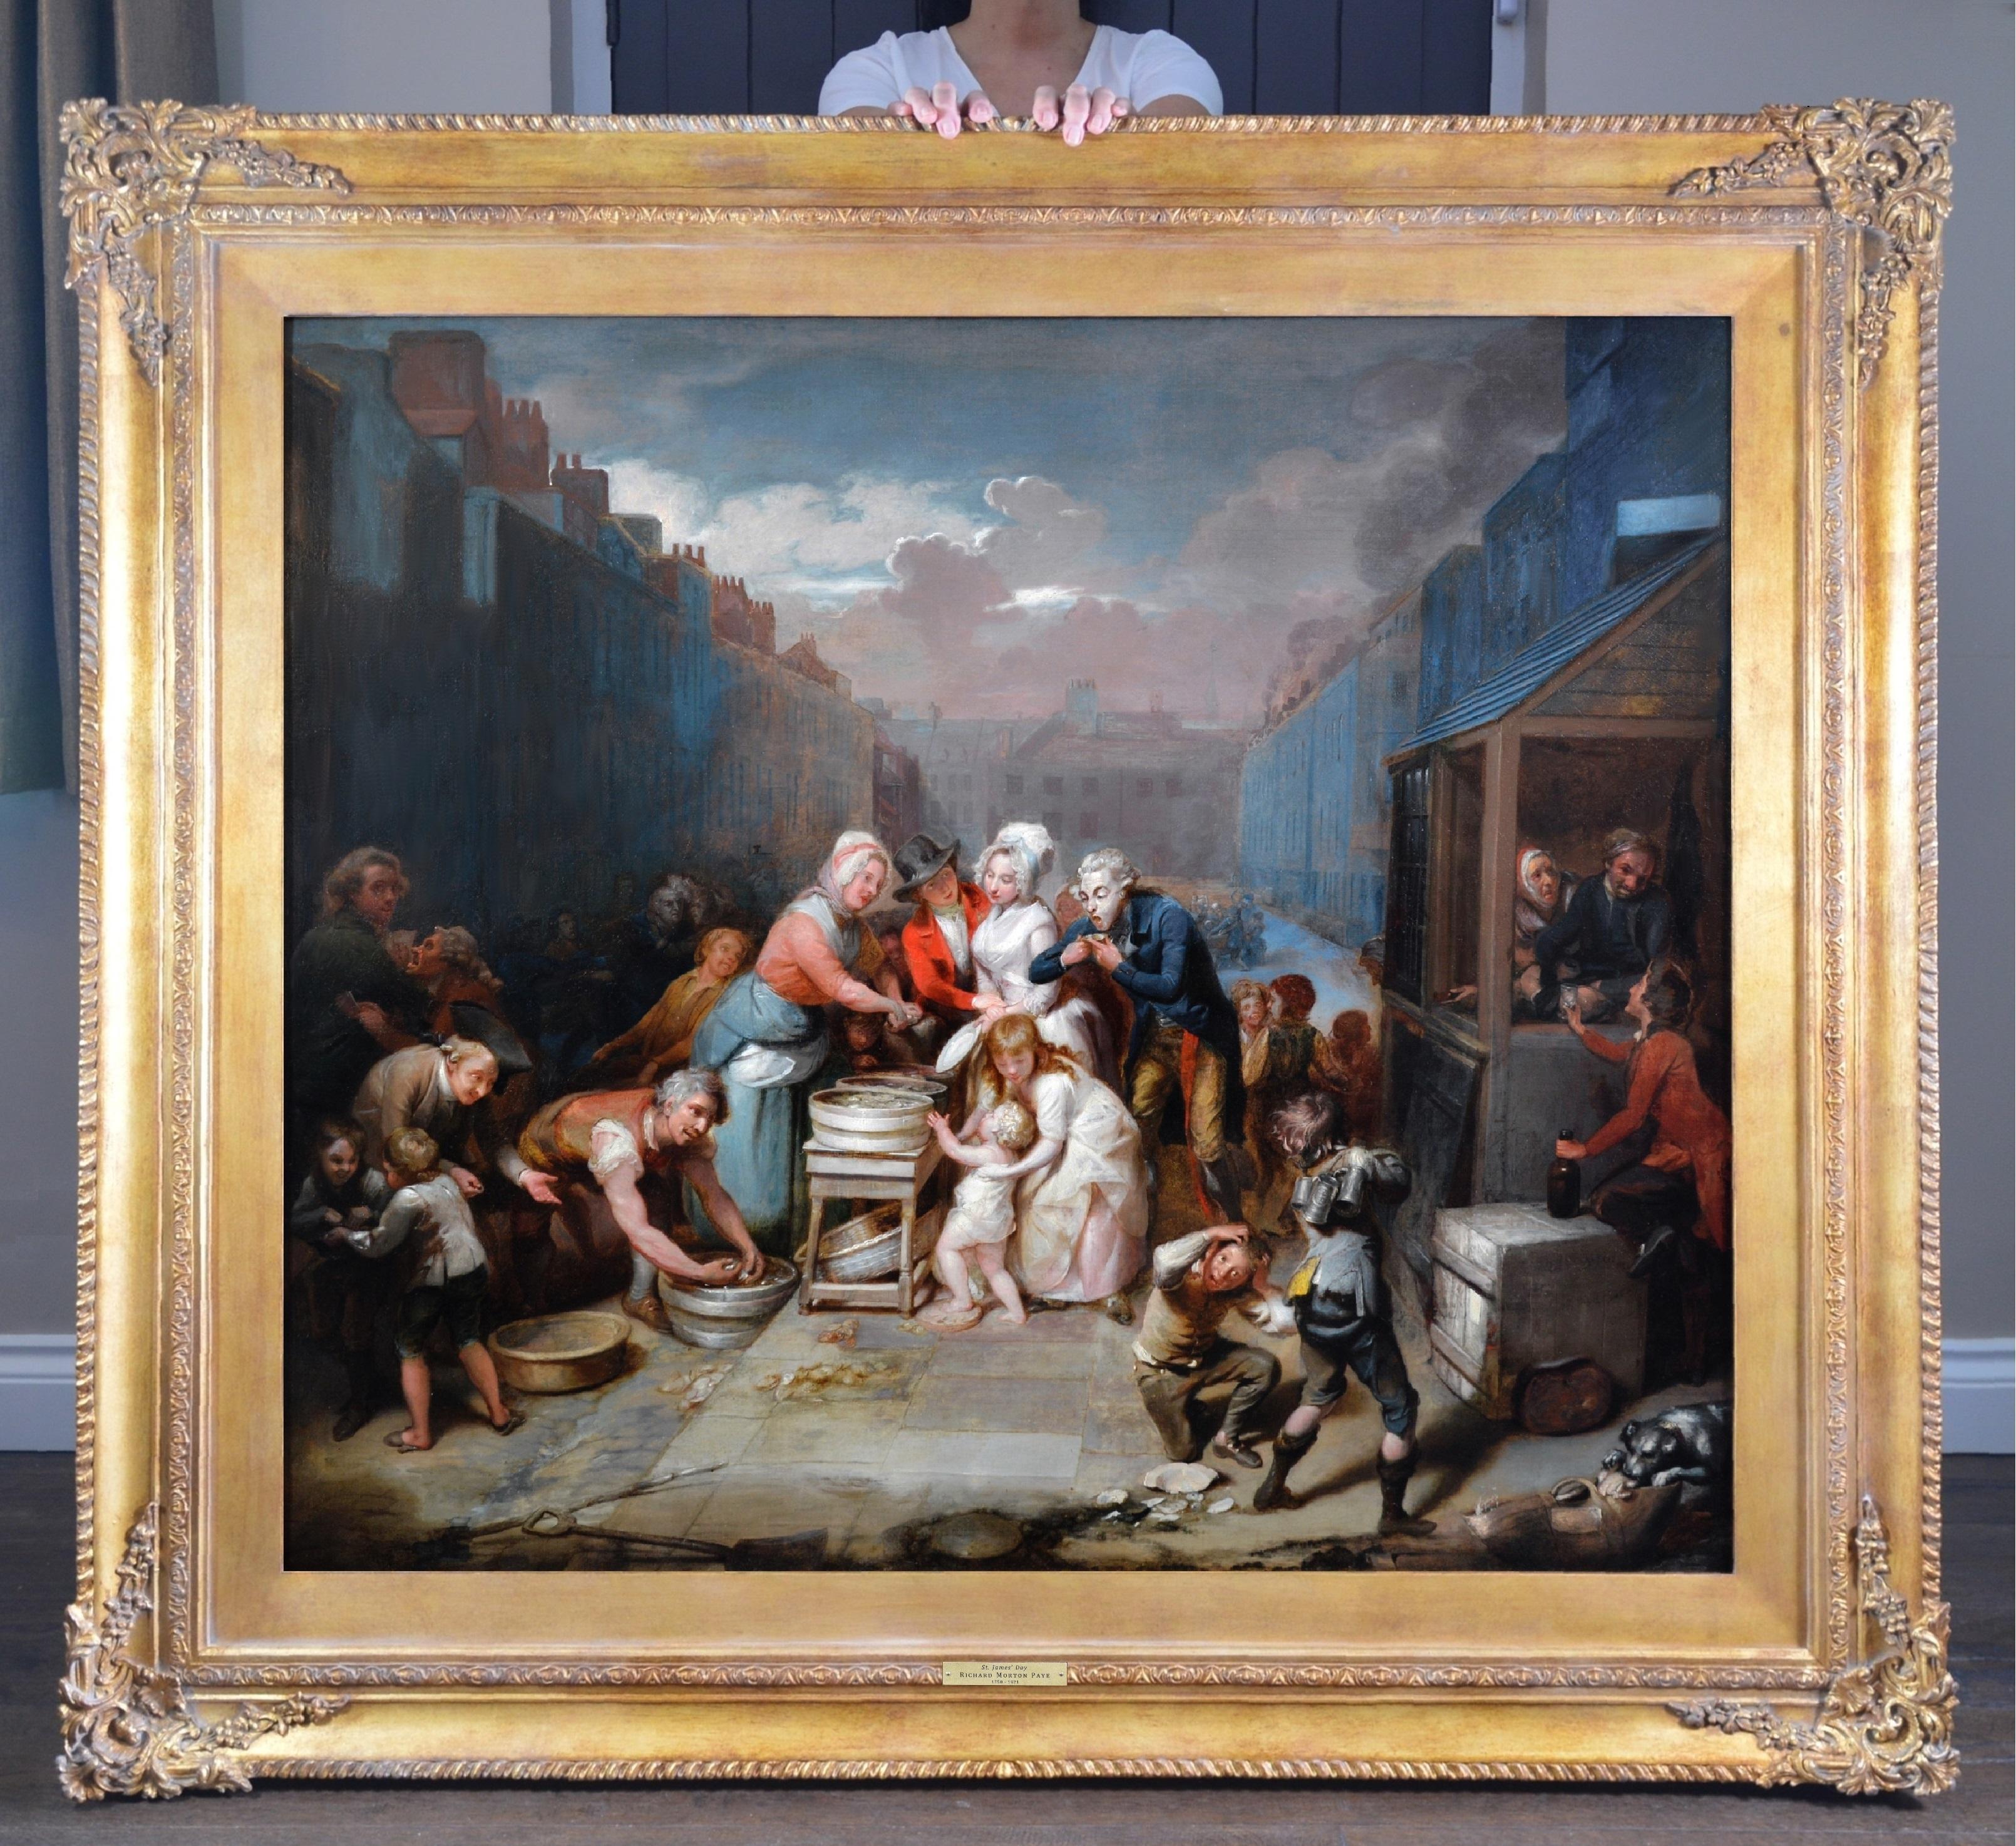 Richard Morton Paye Figurative Painting – Großes Ölgemälde der Royal Academy des georgianischen Londoner Festivals aus dem 18. Jahrhundert